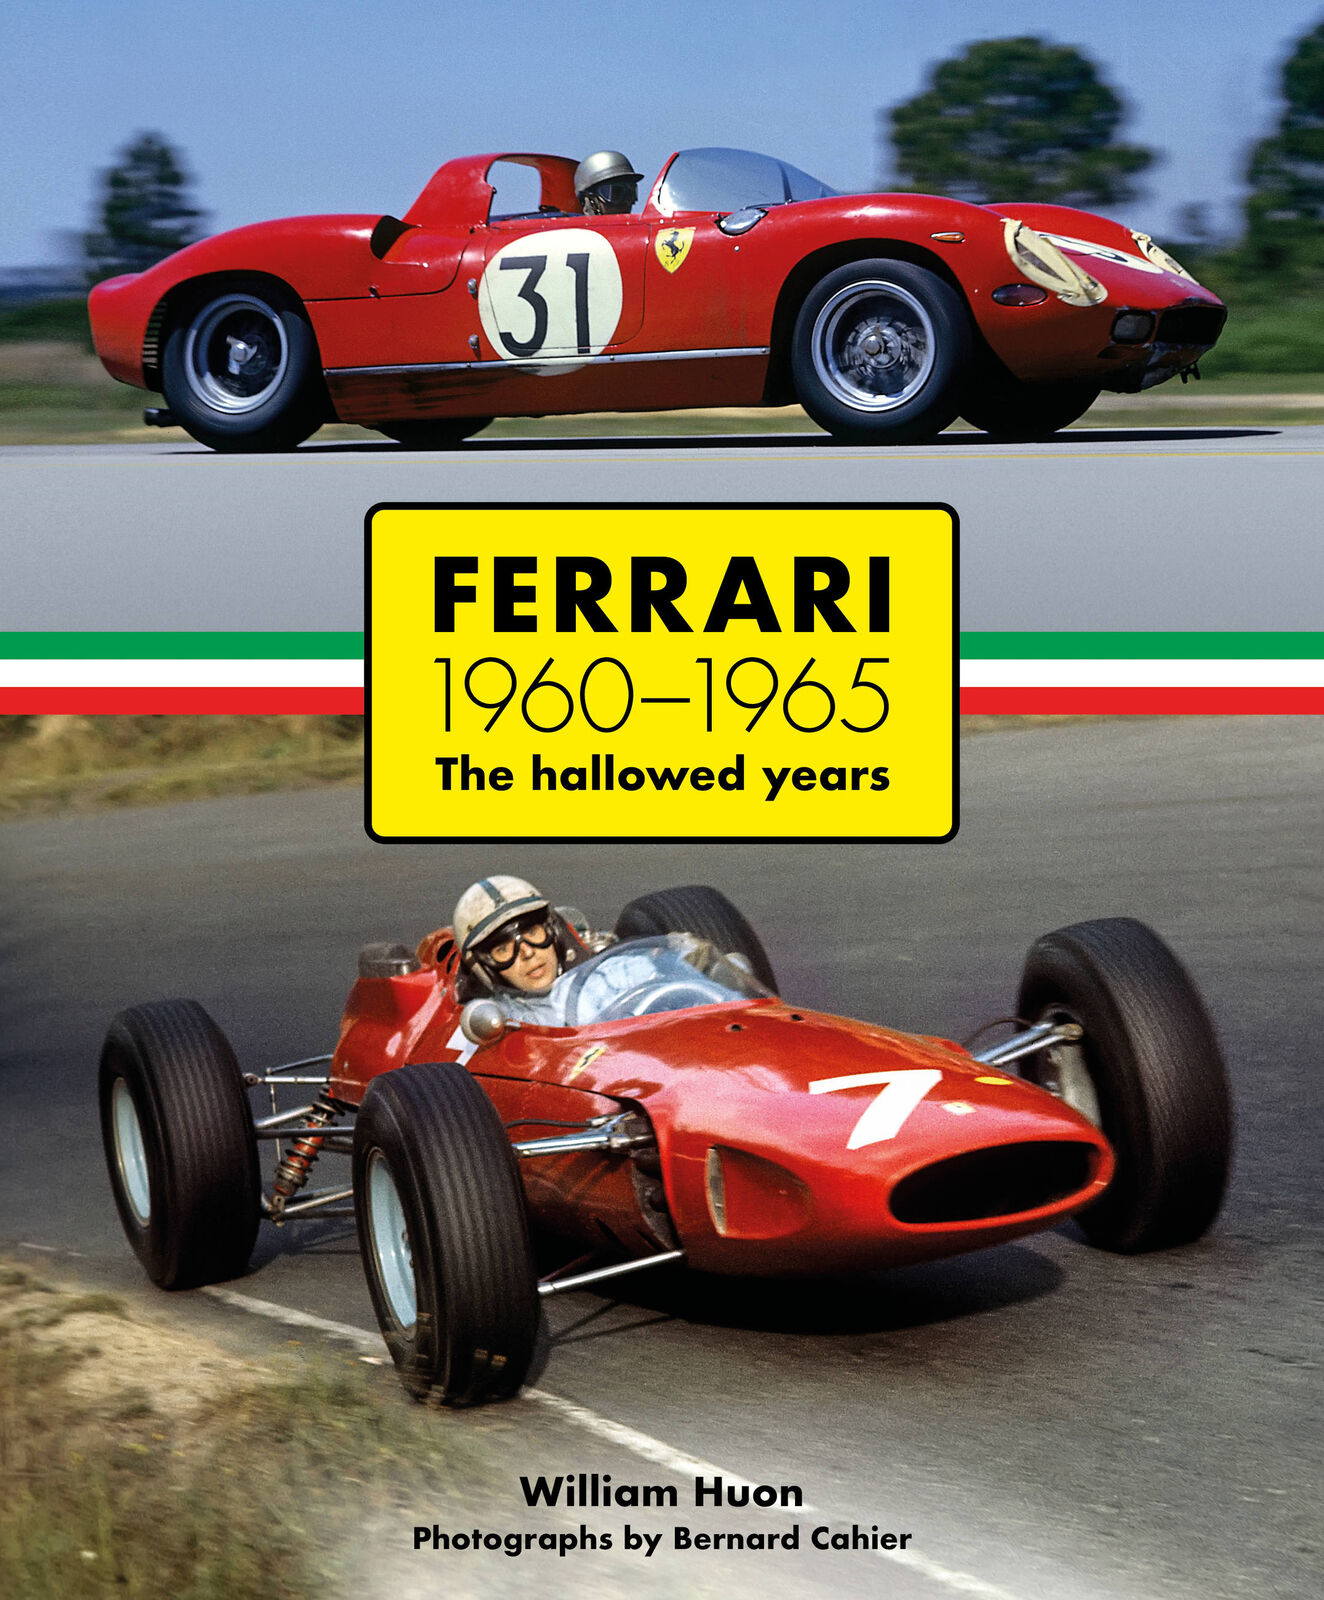 Ferrari 1960-1965 The Hallowed Years F1 LeMans GTO GT book